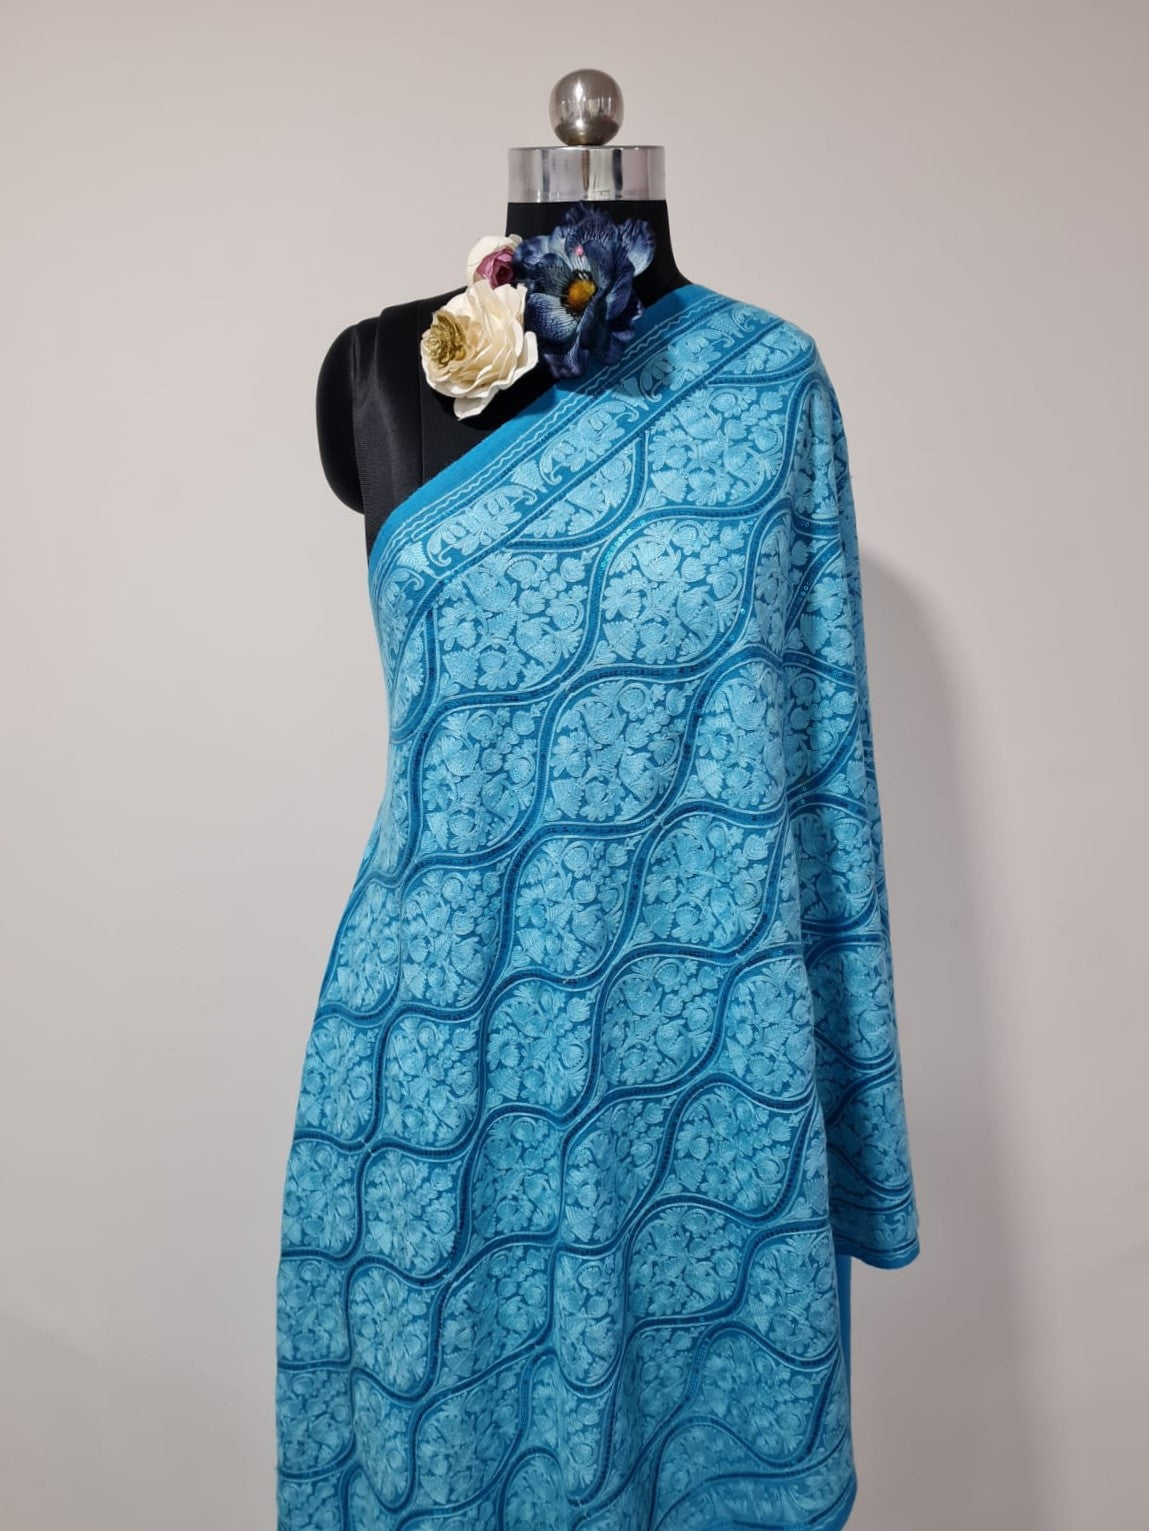 Viscose Shawl, Size 70x180 Sky Blue Color Sequence Thread Embroidery Work Shawl (TU-2972) Trade UNO